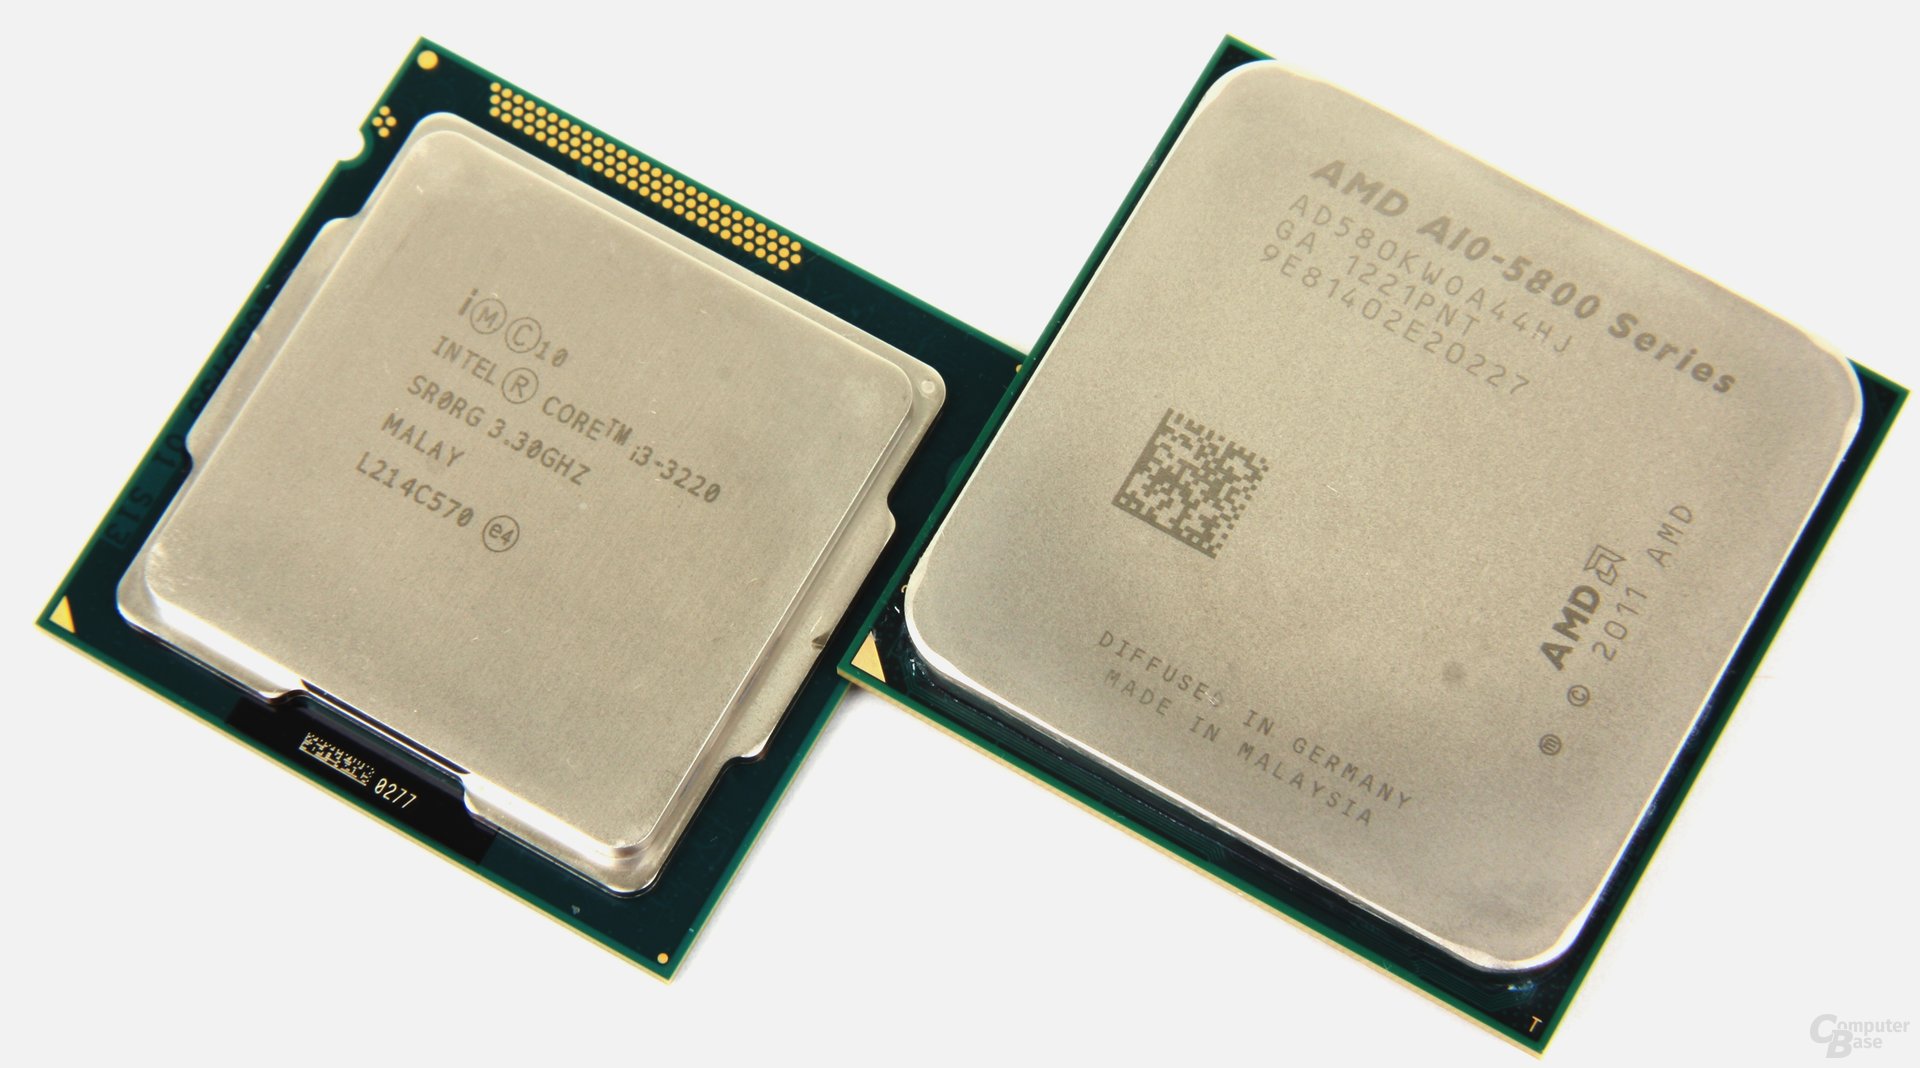 Intel Core i3-3220 vs. AMD A10-5800K